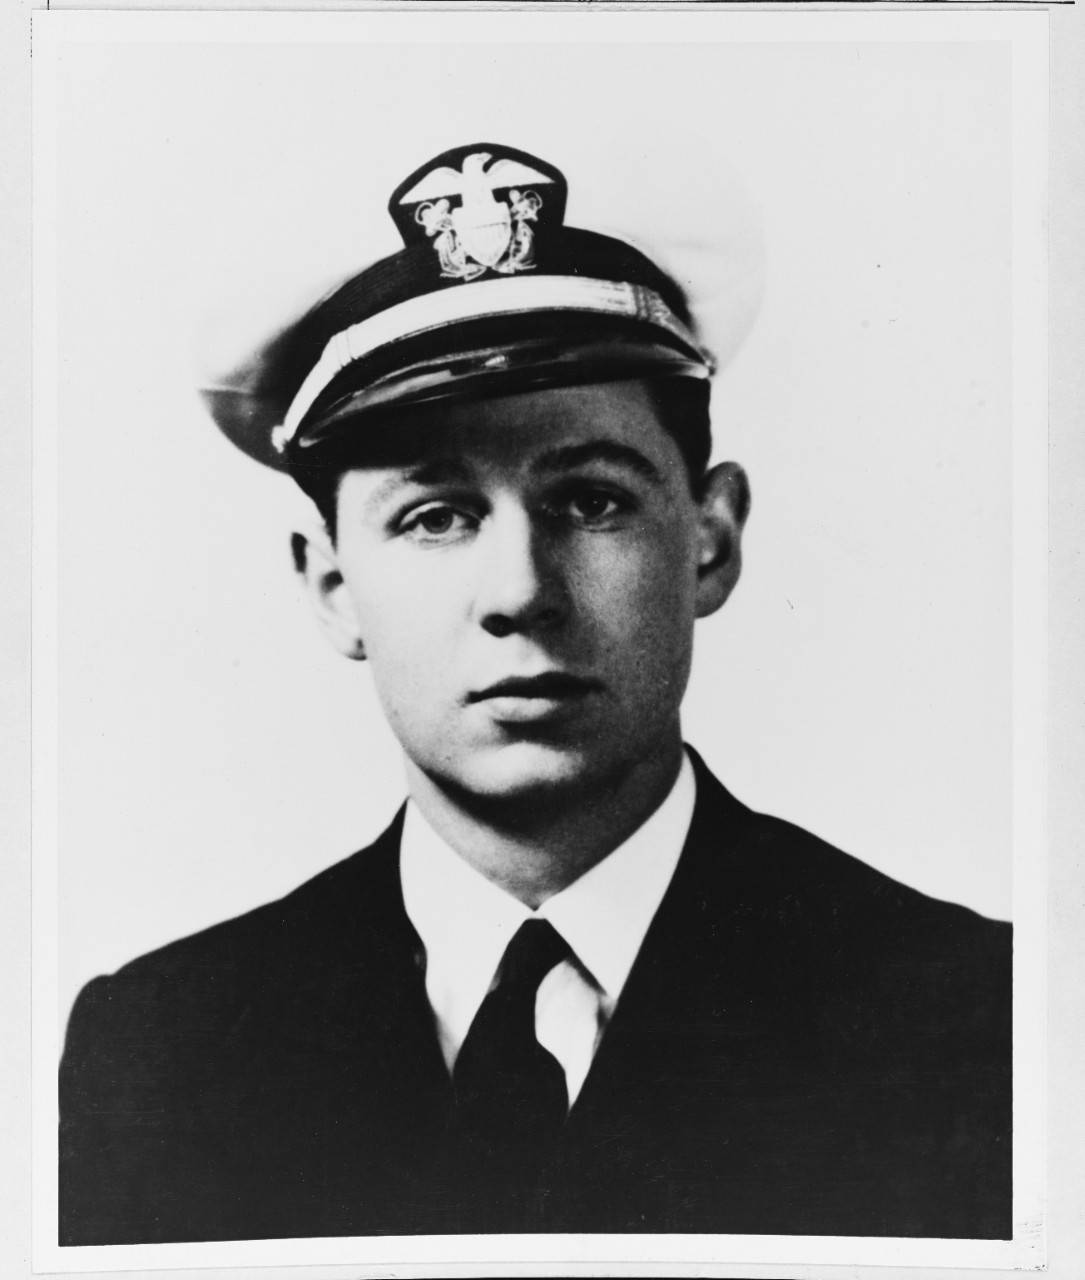 Lieutenant Junior Grade Joseph W. Vance, USNR, circa 1941.